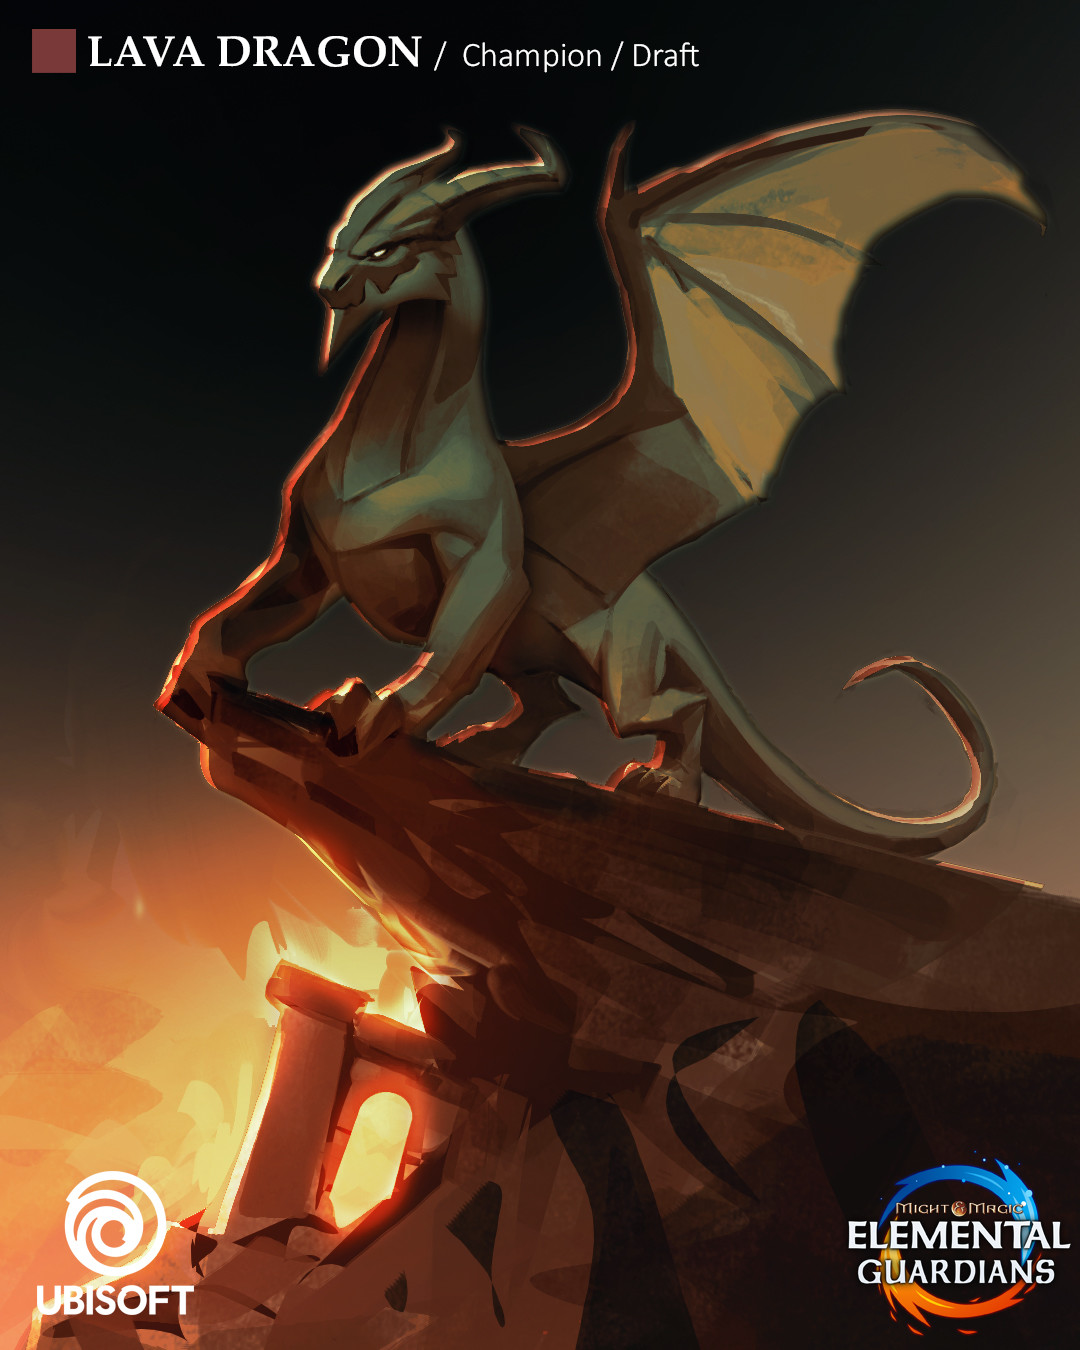 Lava Dragon - Champion Version - Color Draft
(videogame Might&amp;Magic Elemental Guardians)